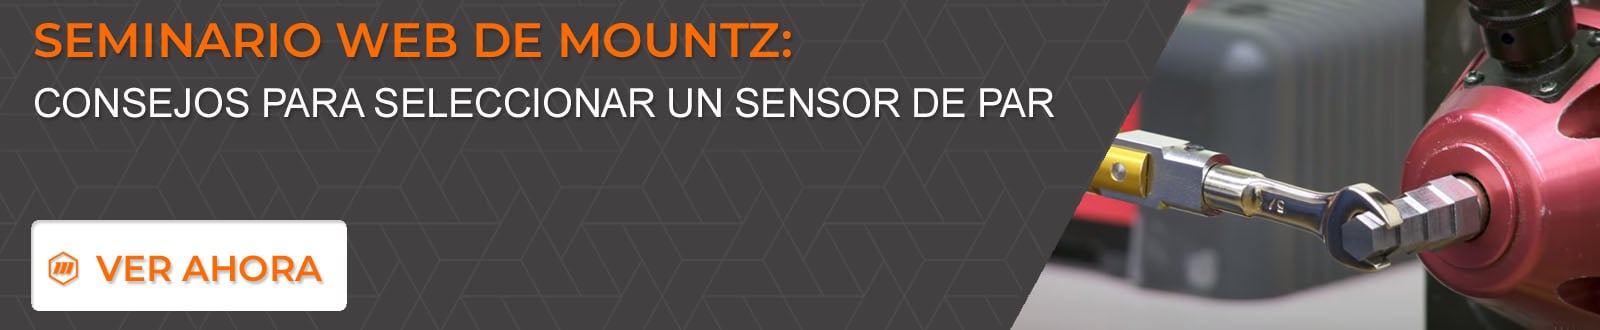 torque-sensor-tips-Banner-Category-spanish-post